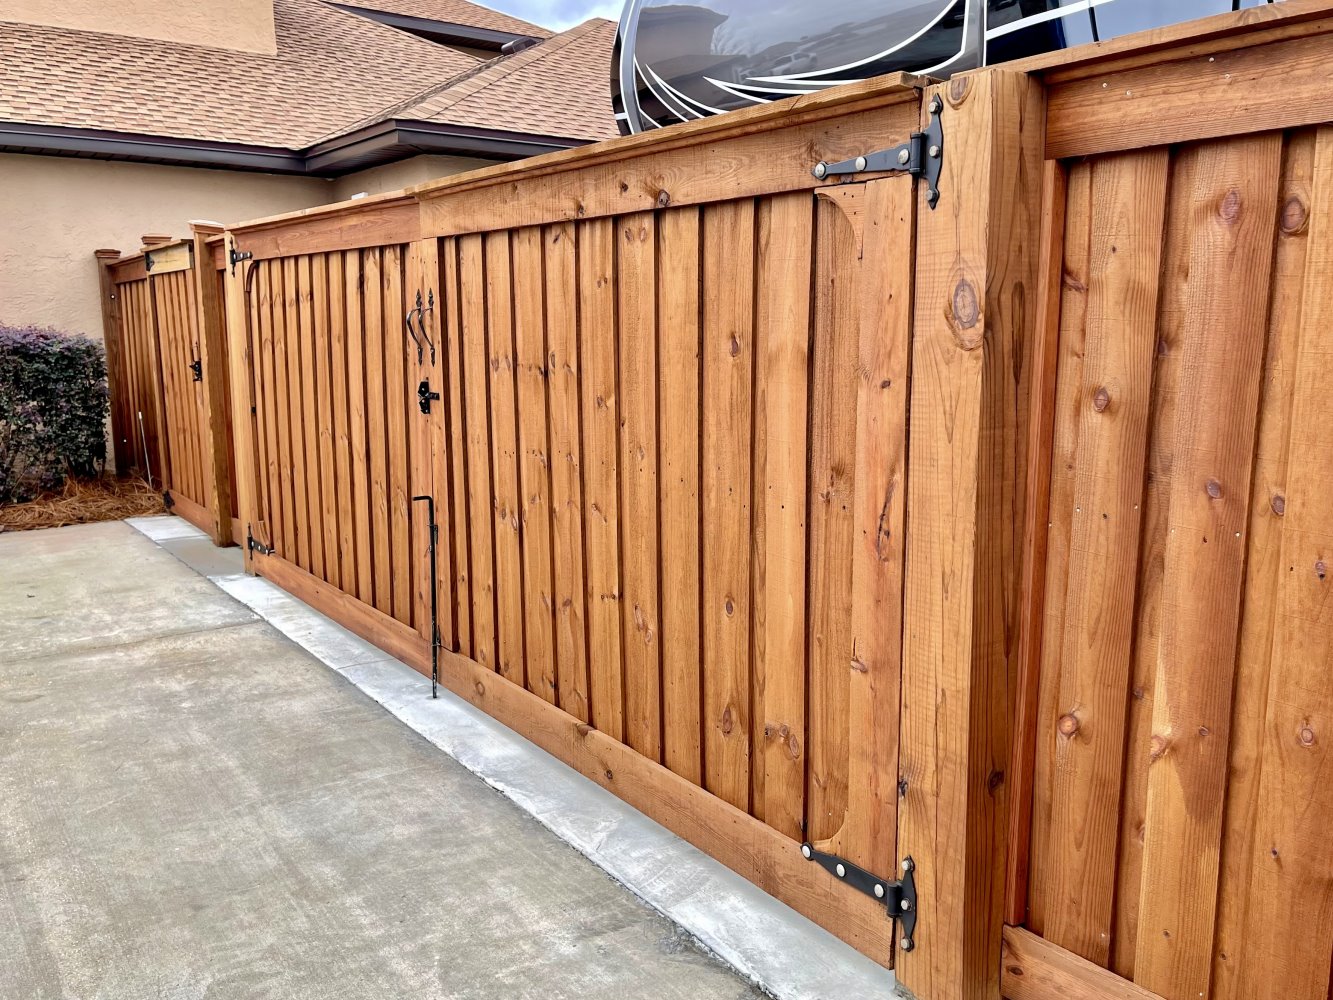 Bostwick FL cap and trim style wood fence